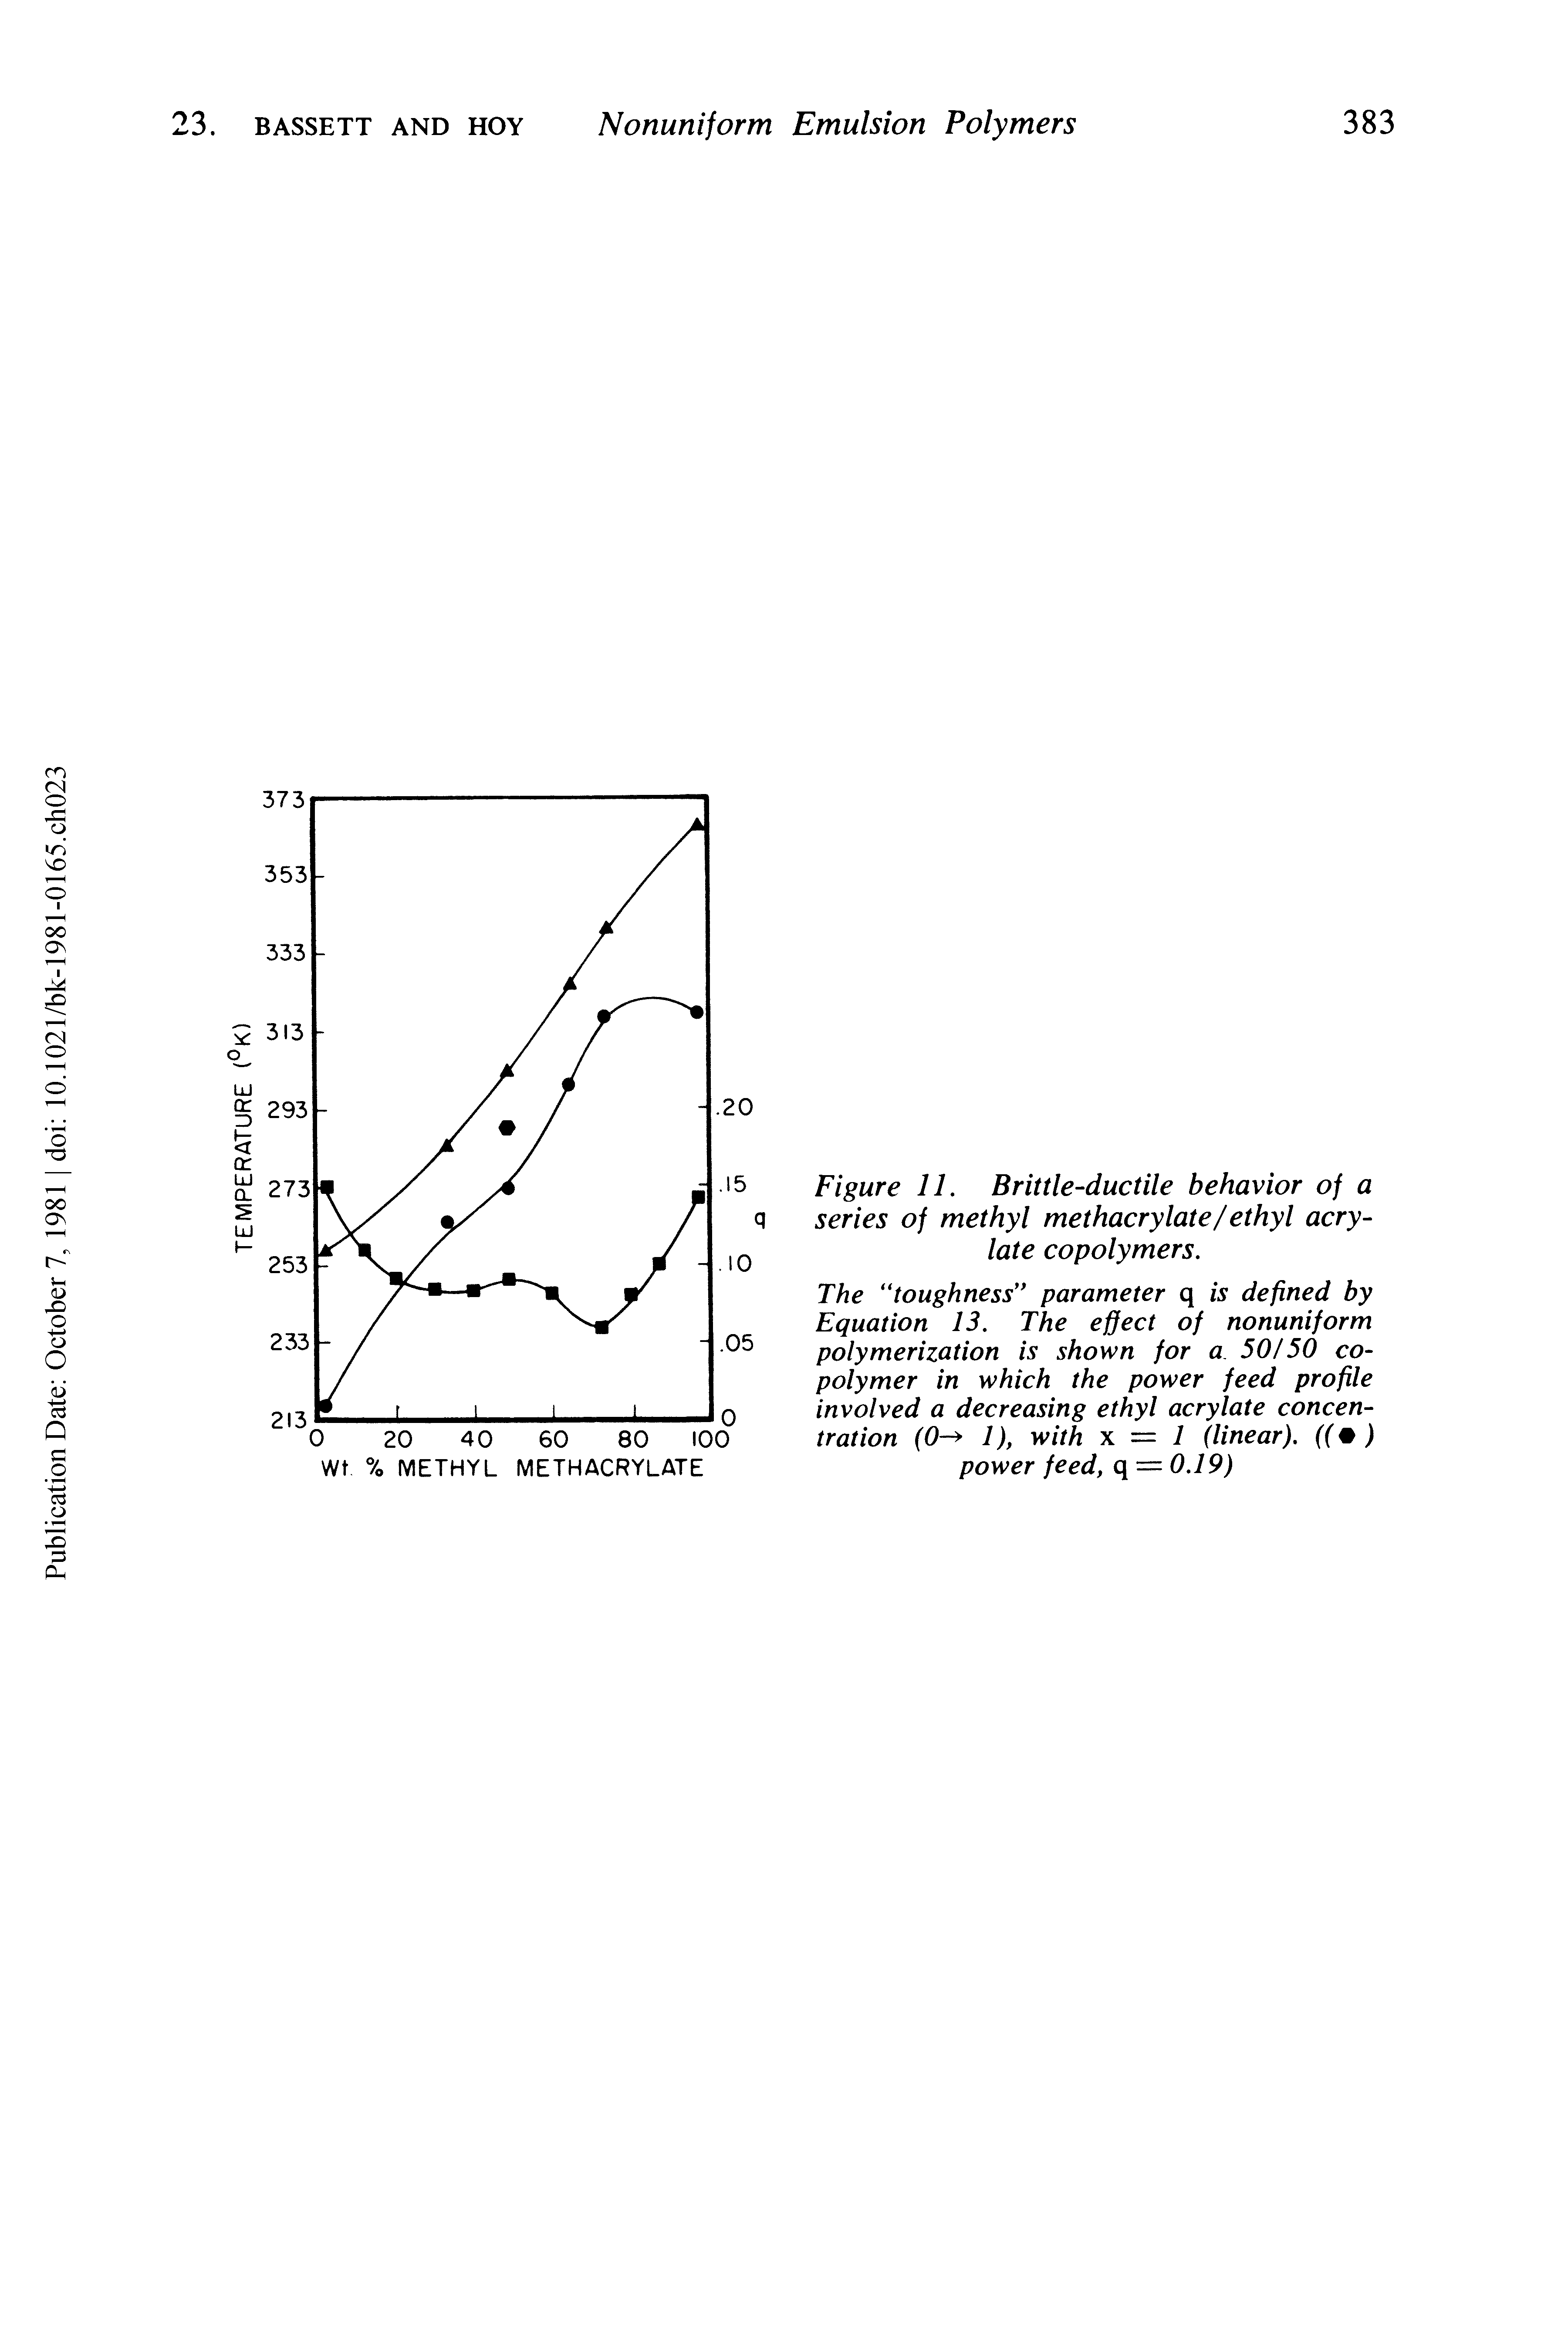 Figure 11. Brittle-ductile behavior of a series of methyl methacrylate/ethyl acrylate copolymers.